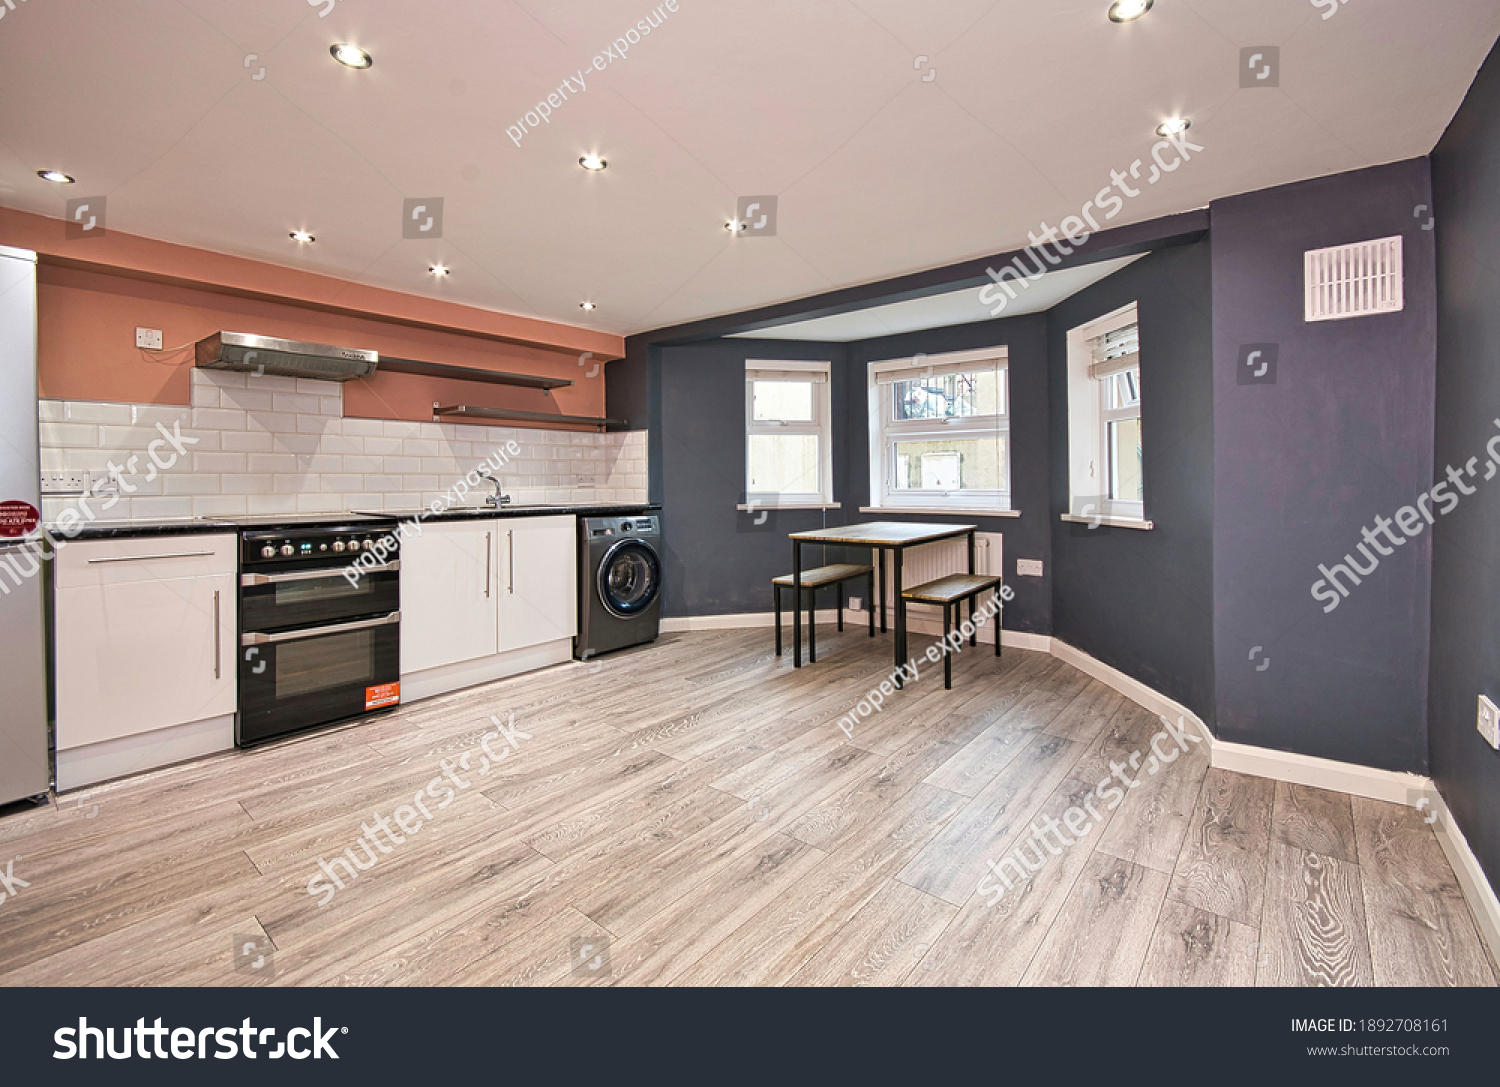 Stock Photo Victorian Conversion Basement Flat Simple Contemporary Kitchen Decor London Uk 1892708161 